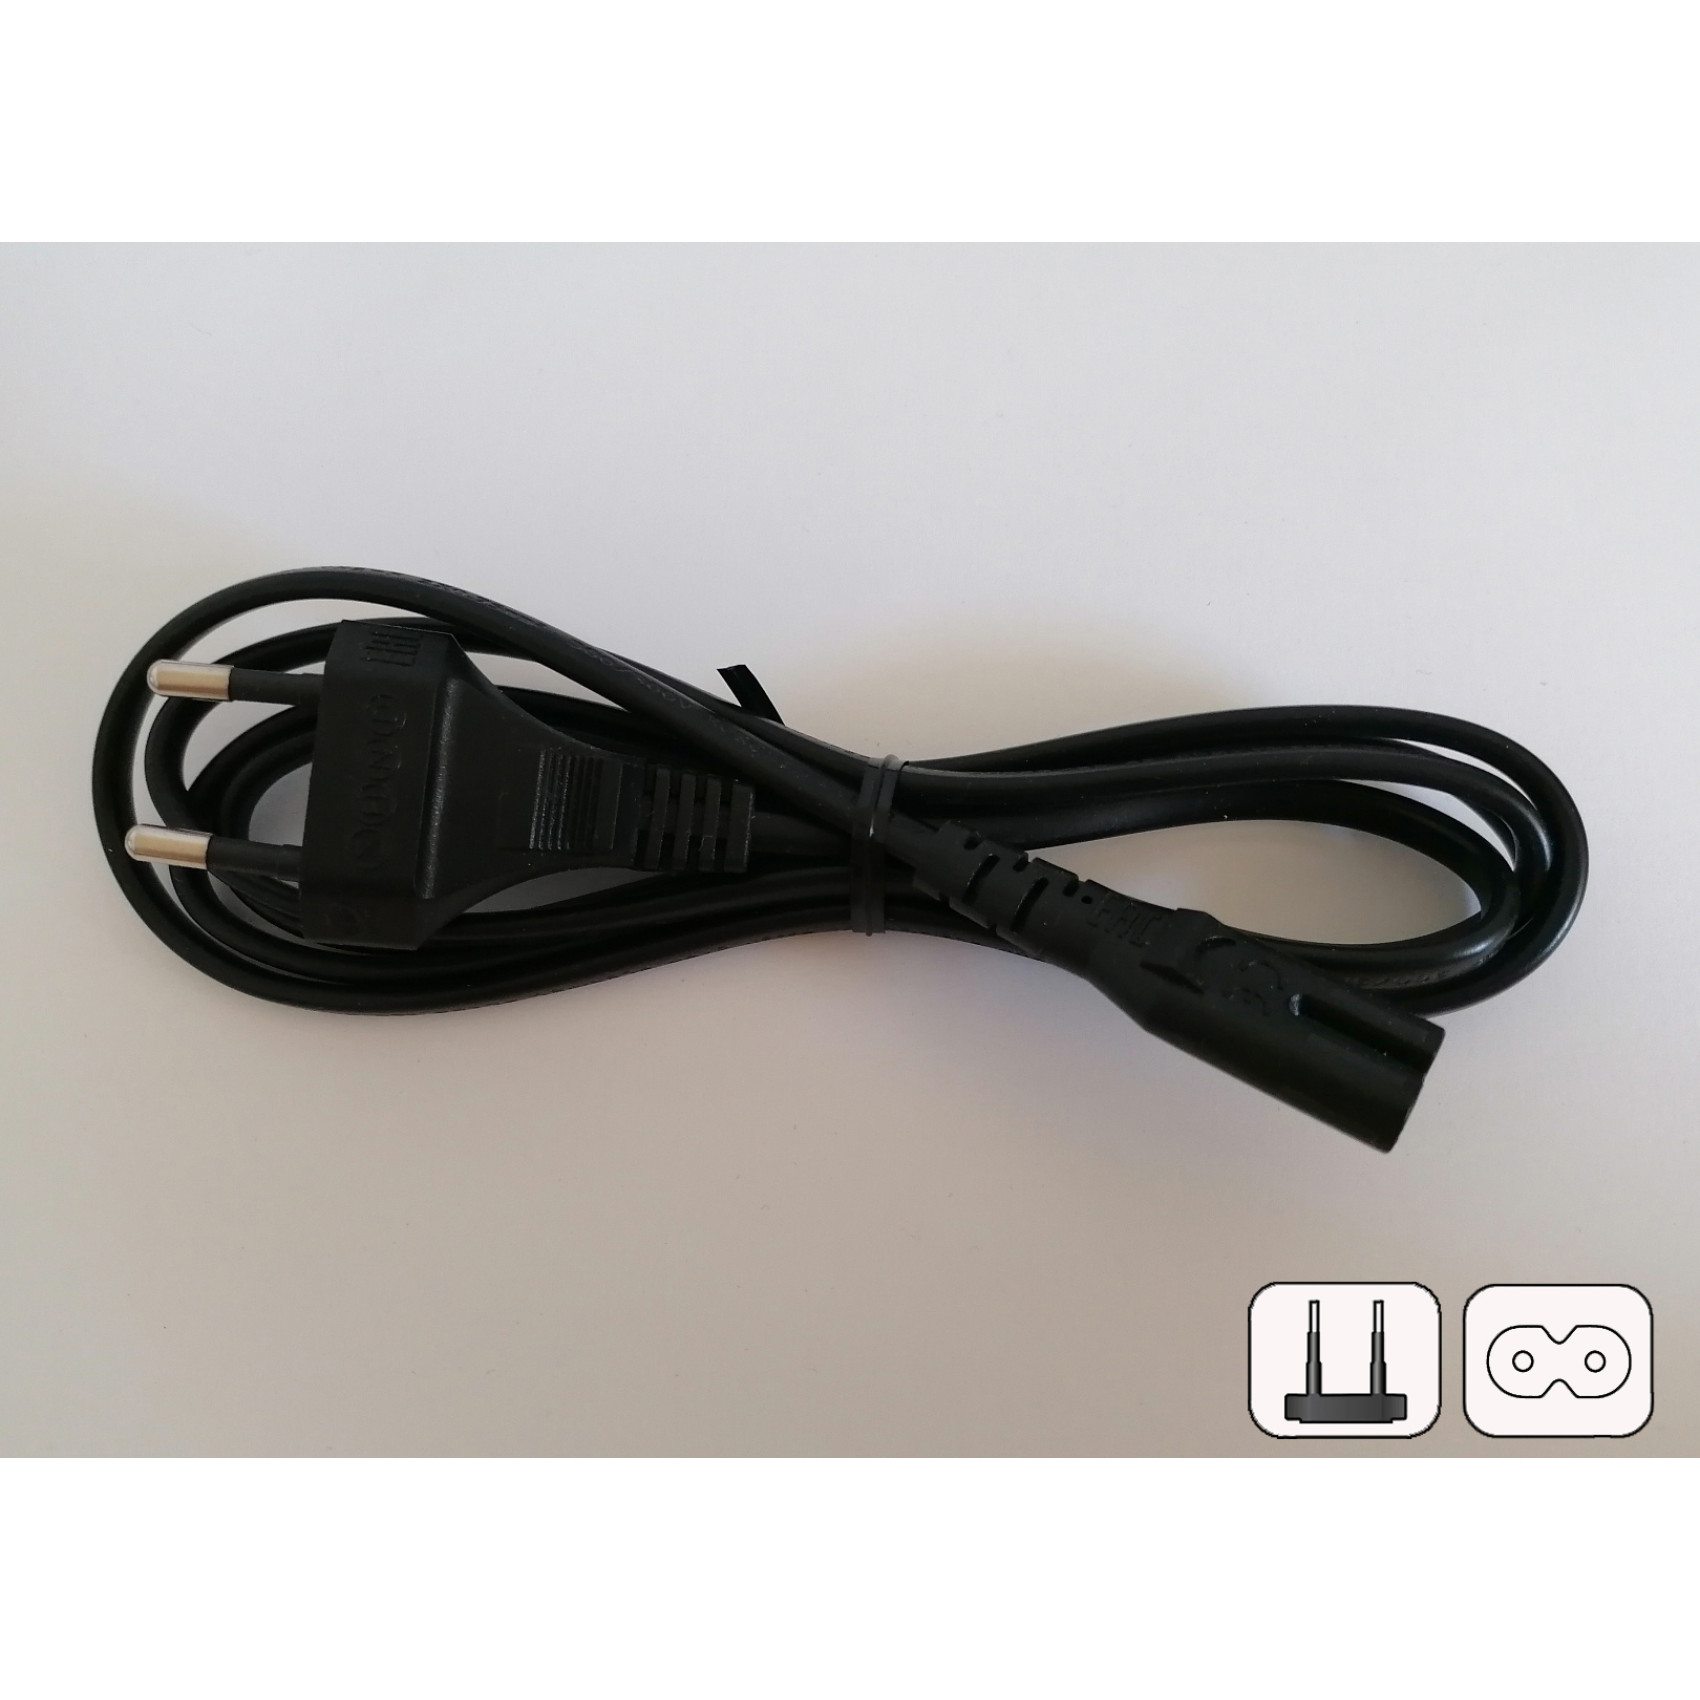 Original Panasonic NV-SB900 Power Cable 1.5m